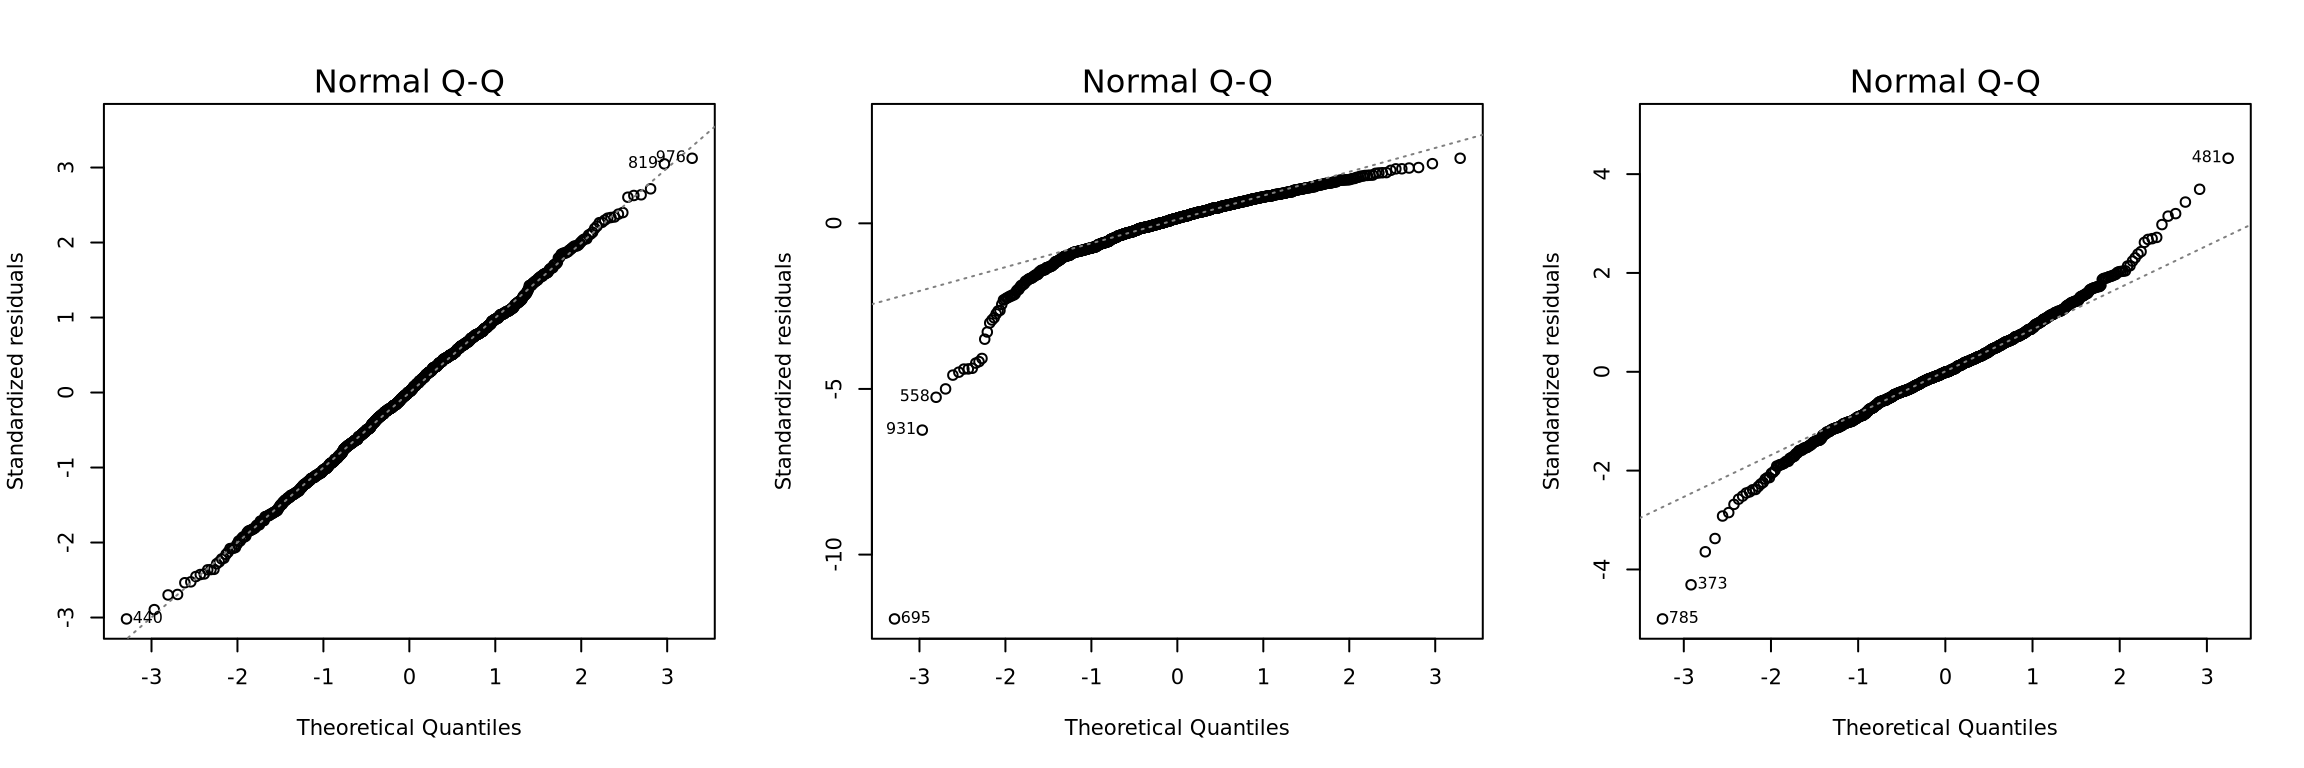 Three examples of Normal Q-Q Plot